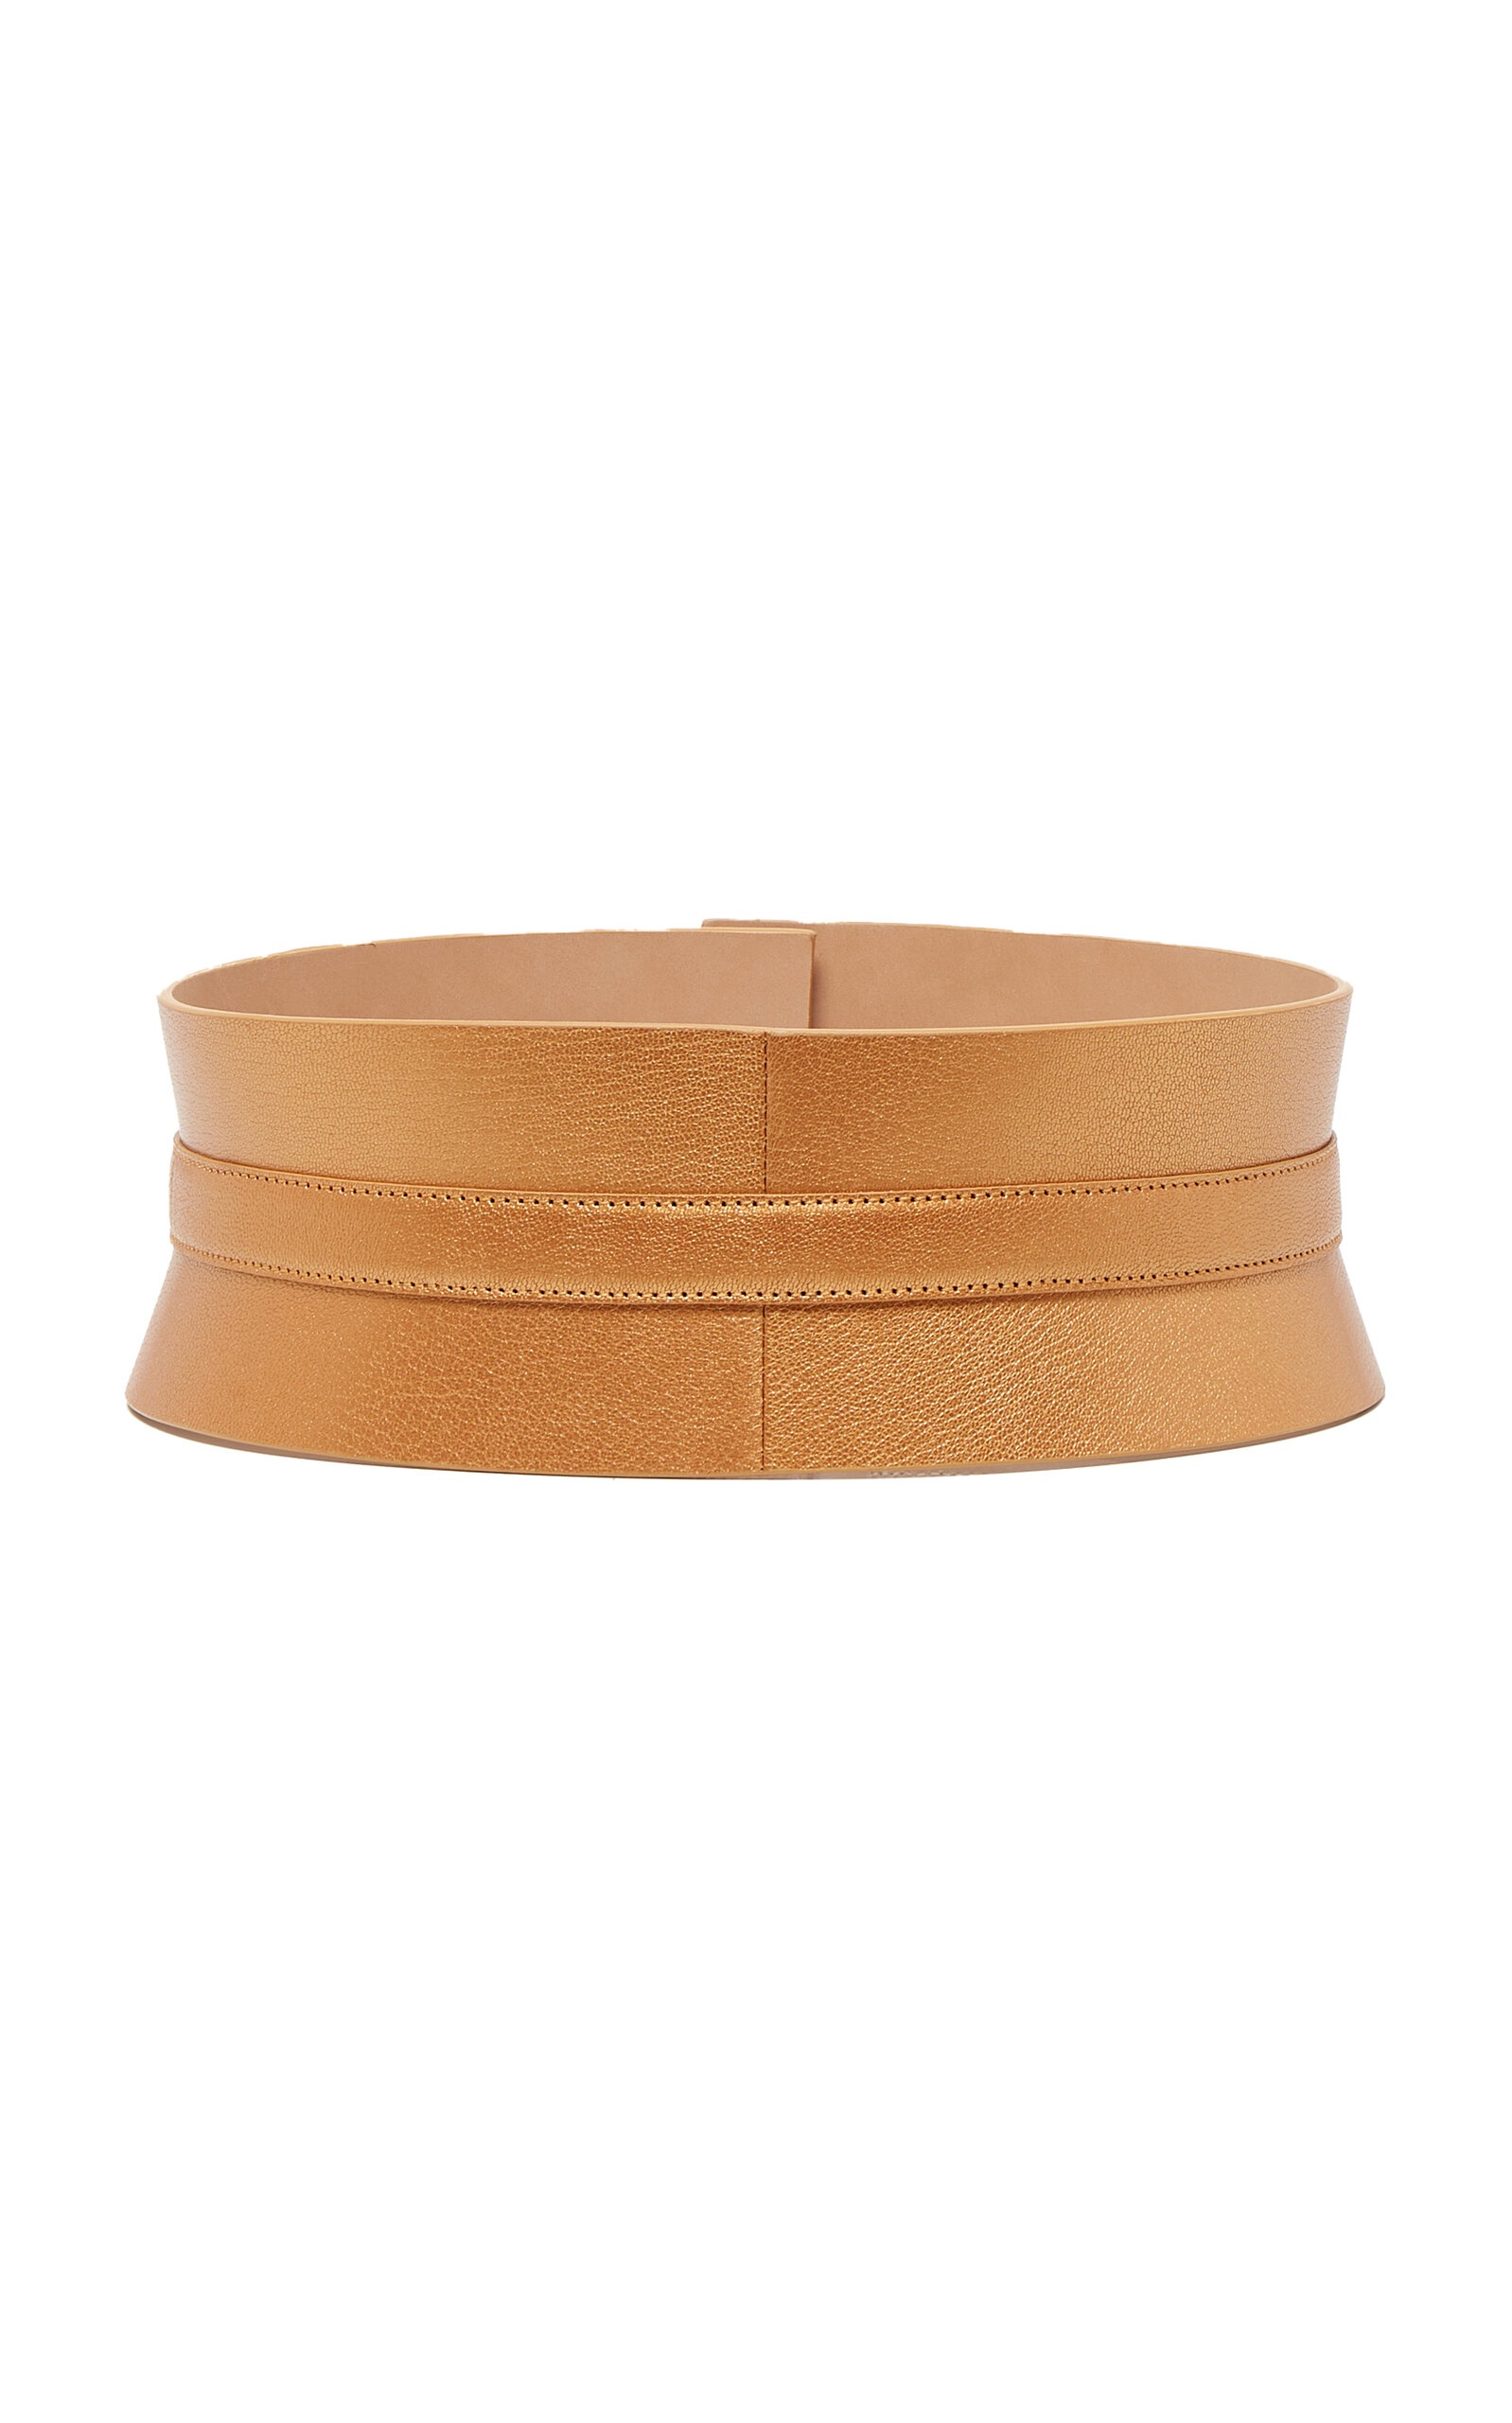 Neo Leather Bustier Belt brown - 2